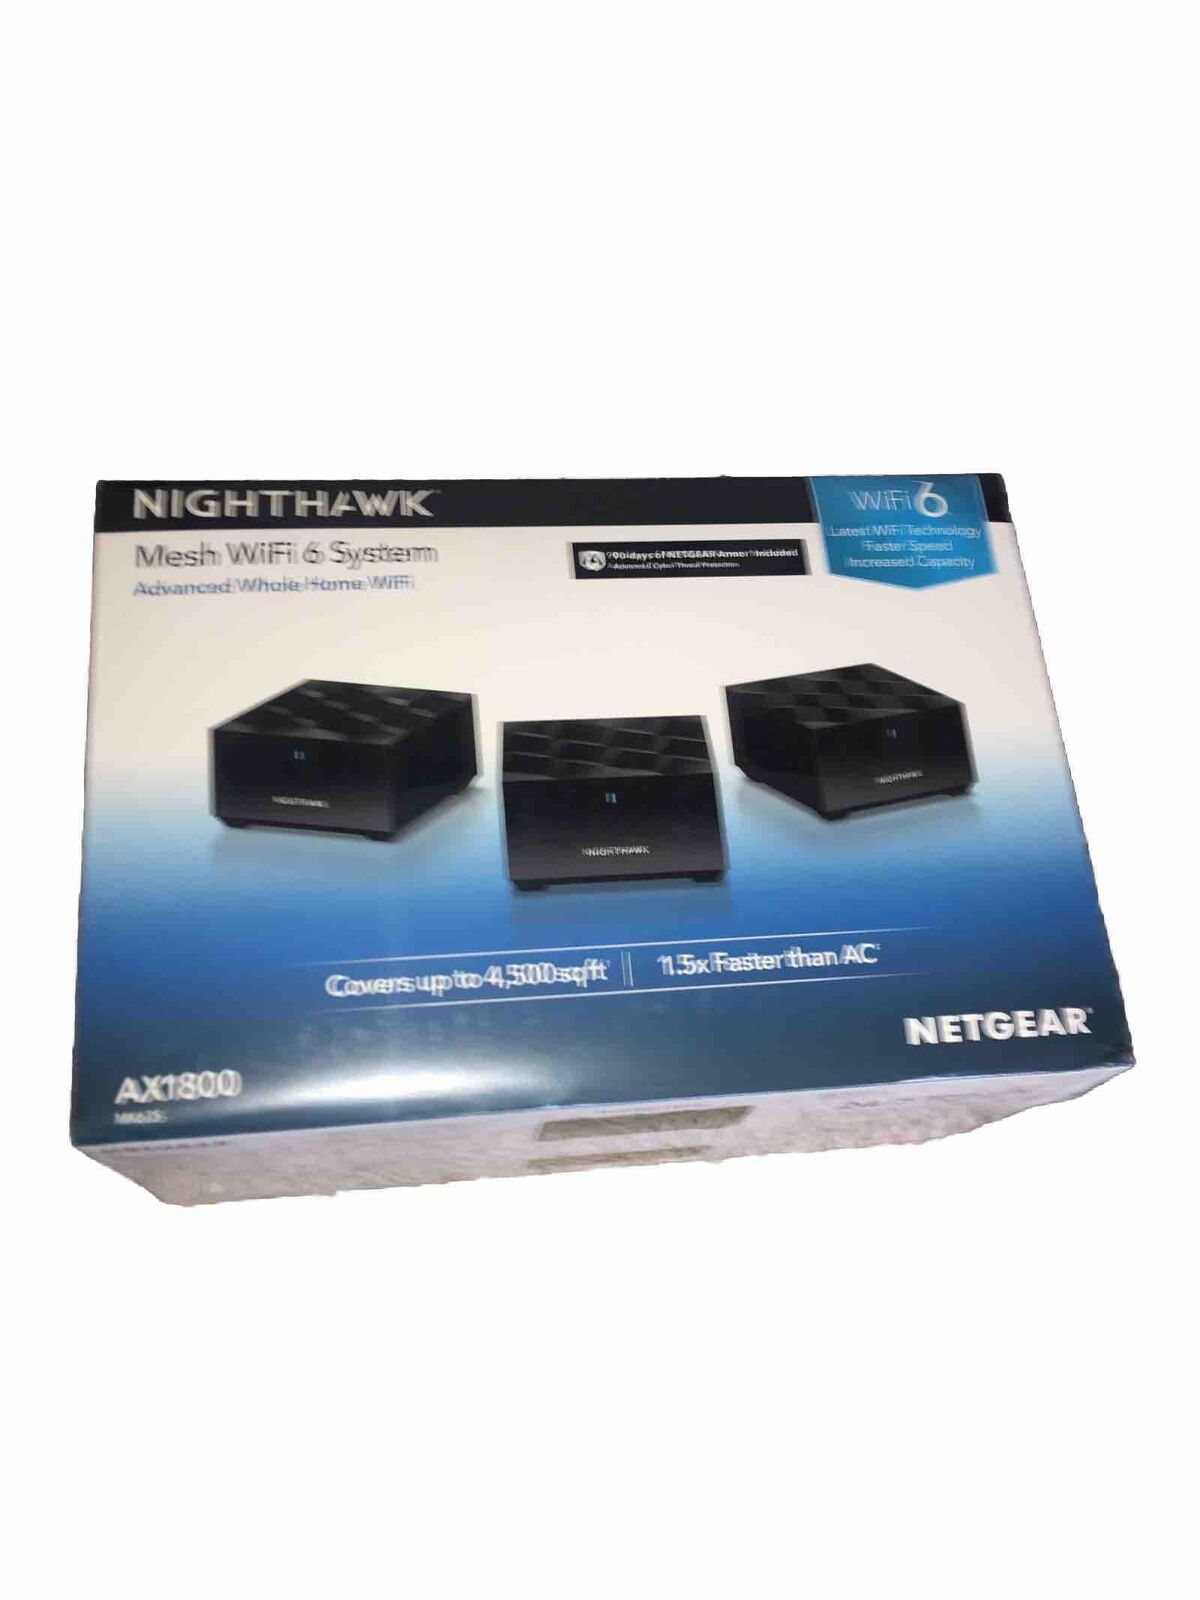 NETGEAR MK63S100NAS Nighthawk  Mesh WiFi 6 System AX 1800 NEW  Factory Sealed 